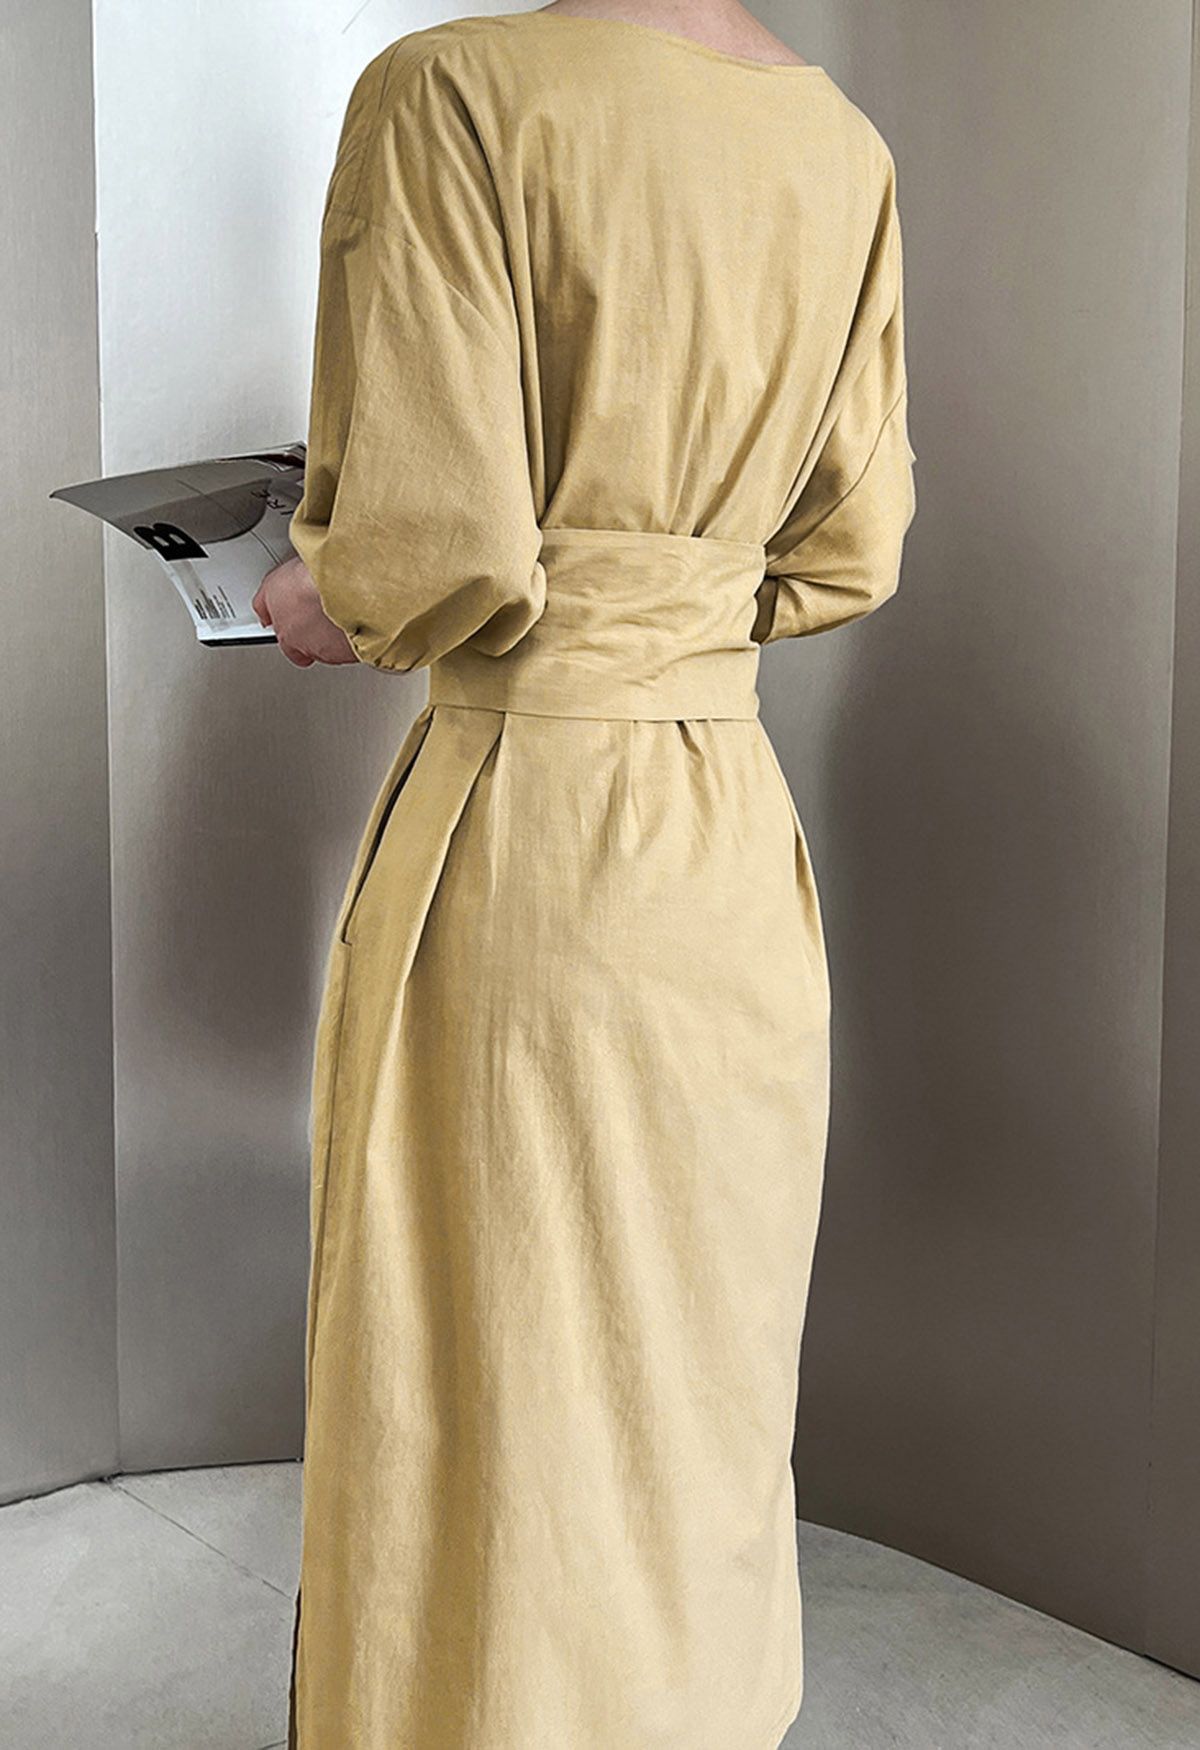 Tie-Waist Elbow Sleeves Linen Dress in Mustard